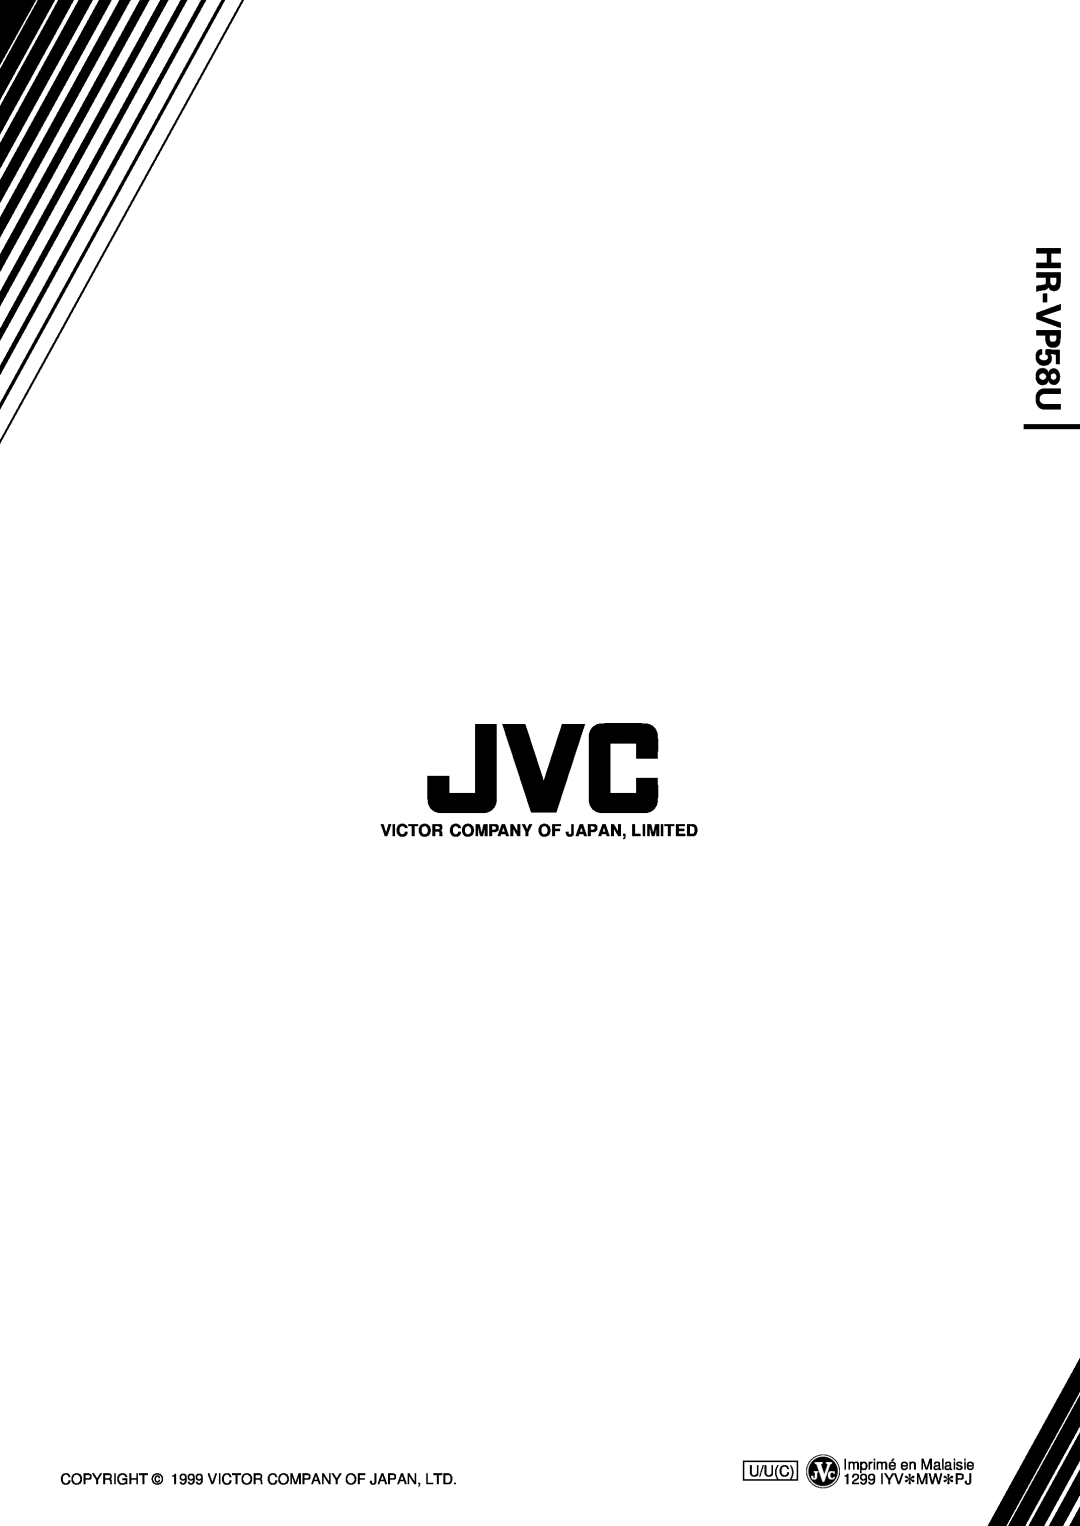 JVC HR-VP58U manual Victor Company Of Japan, Limited, U/Uc, Imprimé en Malaisie 1299 IYV*MW*PJ 